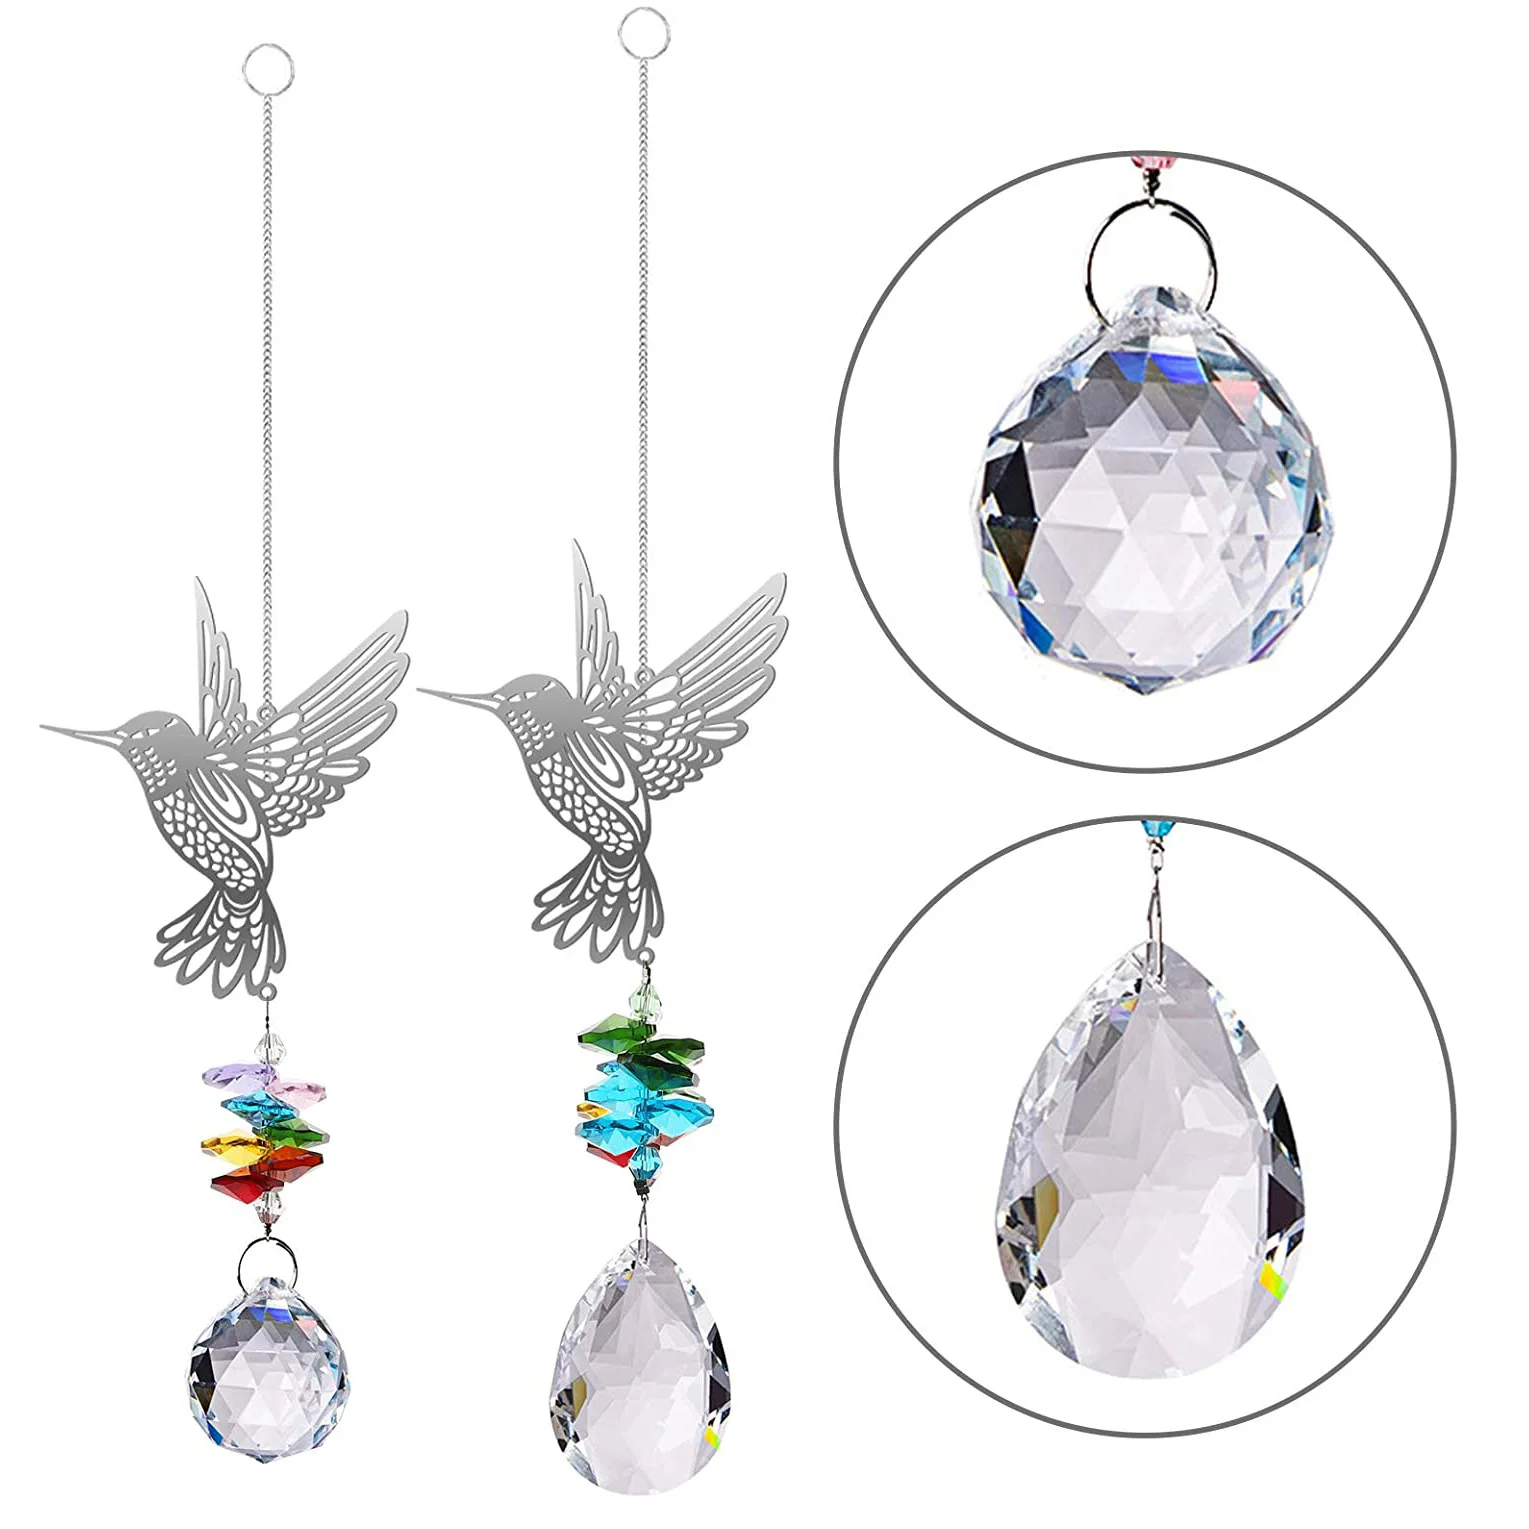 Suncatcher Hummingbird Hanging Crystal Sun Catcher Decor Pendant Garden Prism Ball Decoration Ceiling Fan Pull Chain